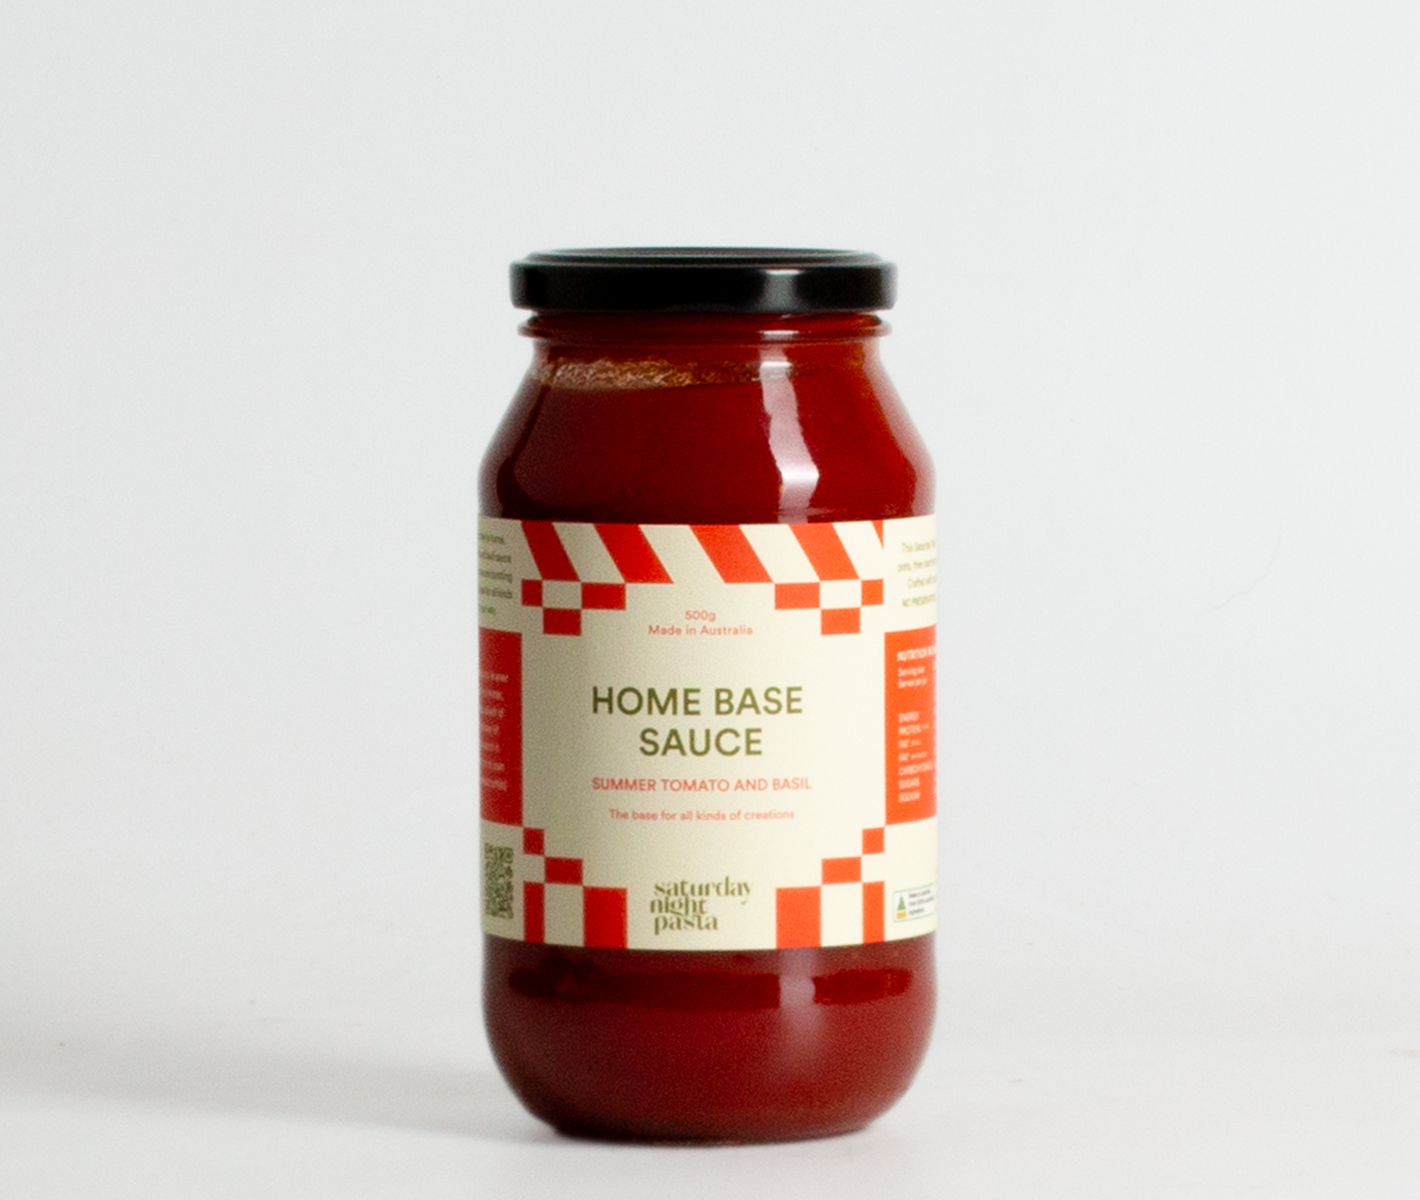 Saturday Night Pasta Home Base Sauce (500g)